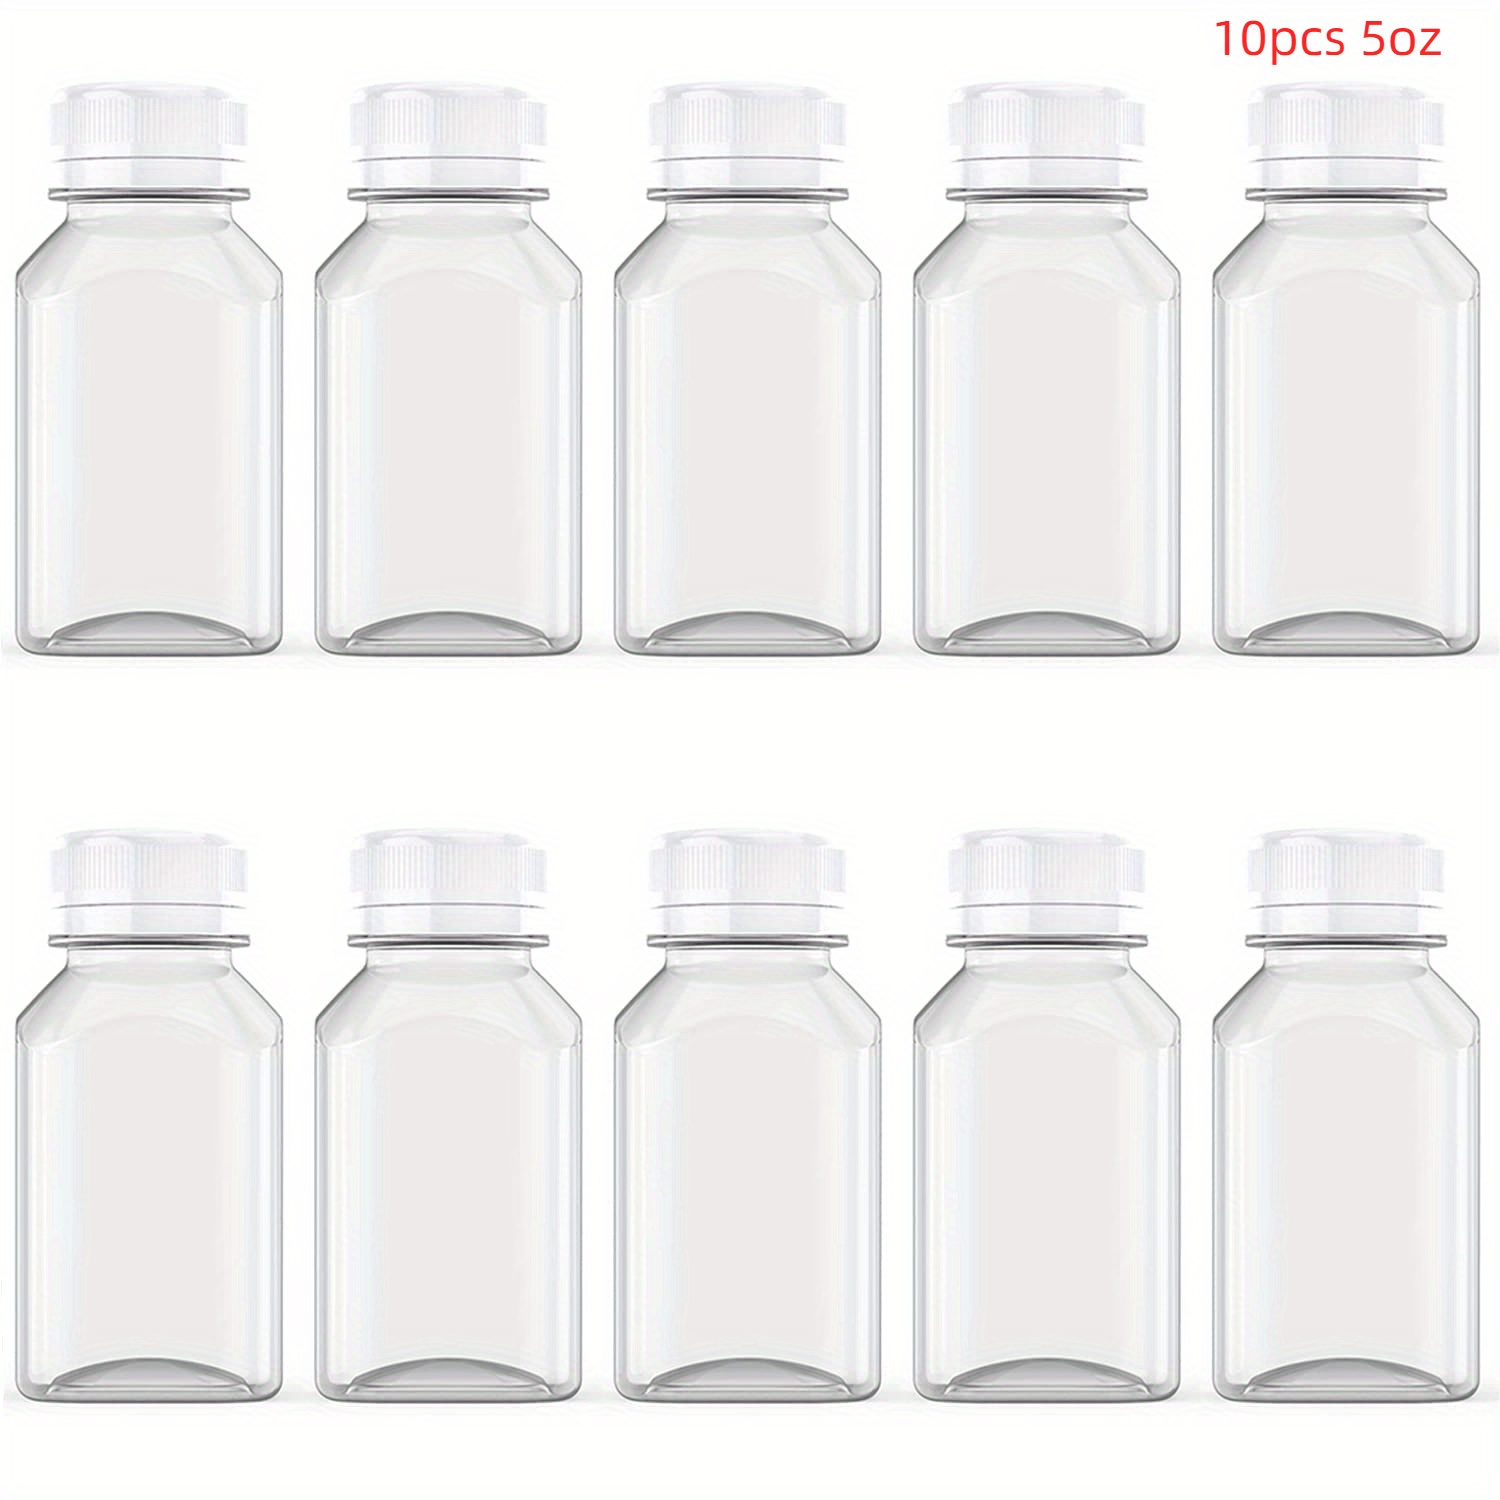 6 Packs Empty Plastic Juice Bottles with Black Caps, Reusable